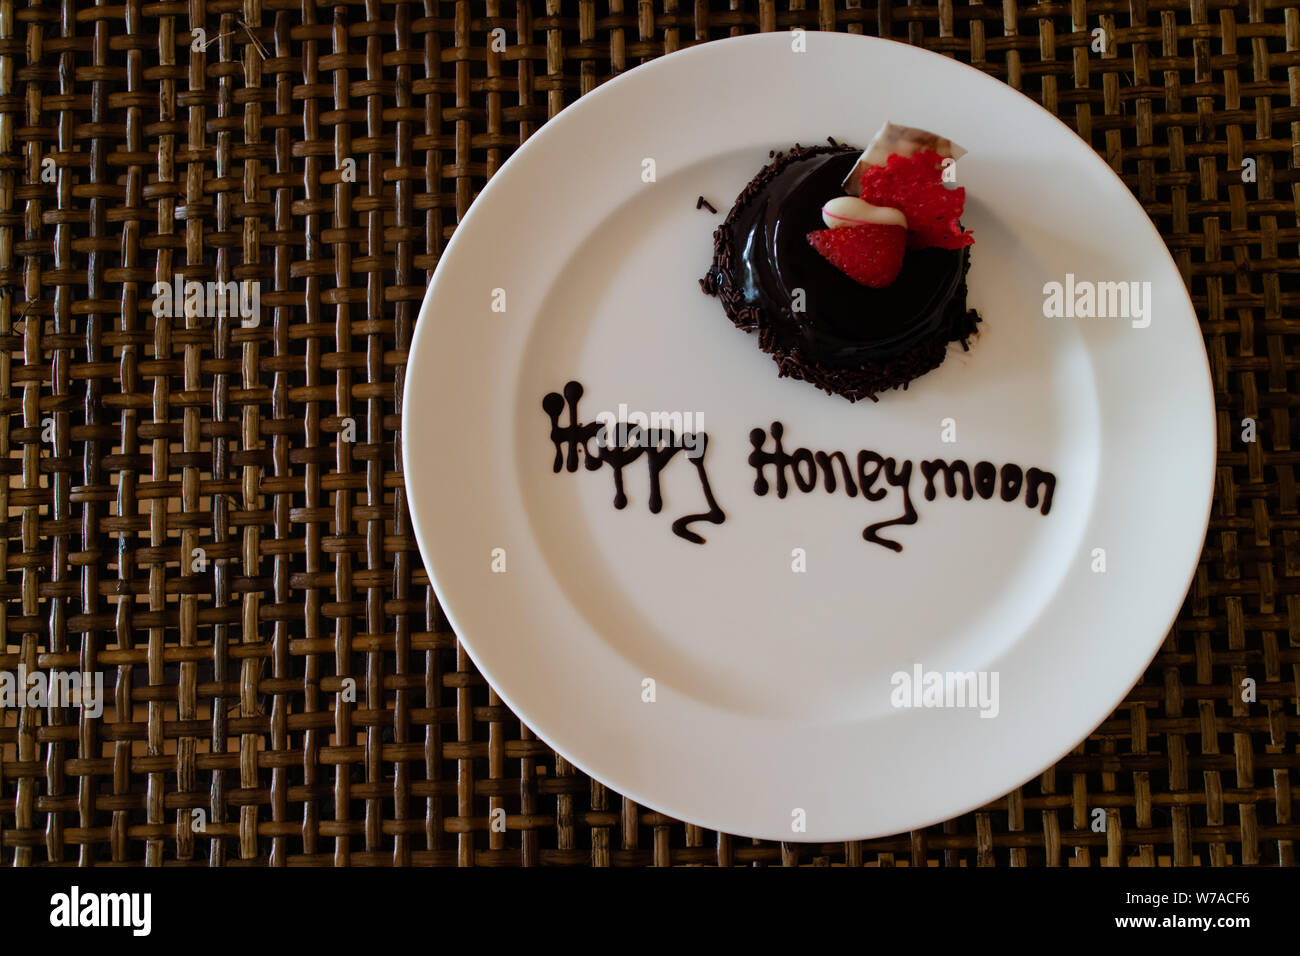 Buy/Send Romantic Honeymoon Cake Online @ Rs. 3599 - SendBestGift